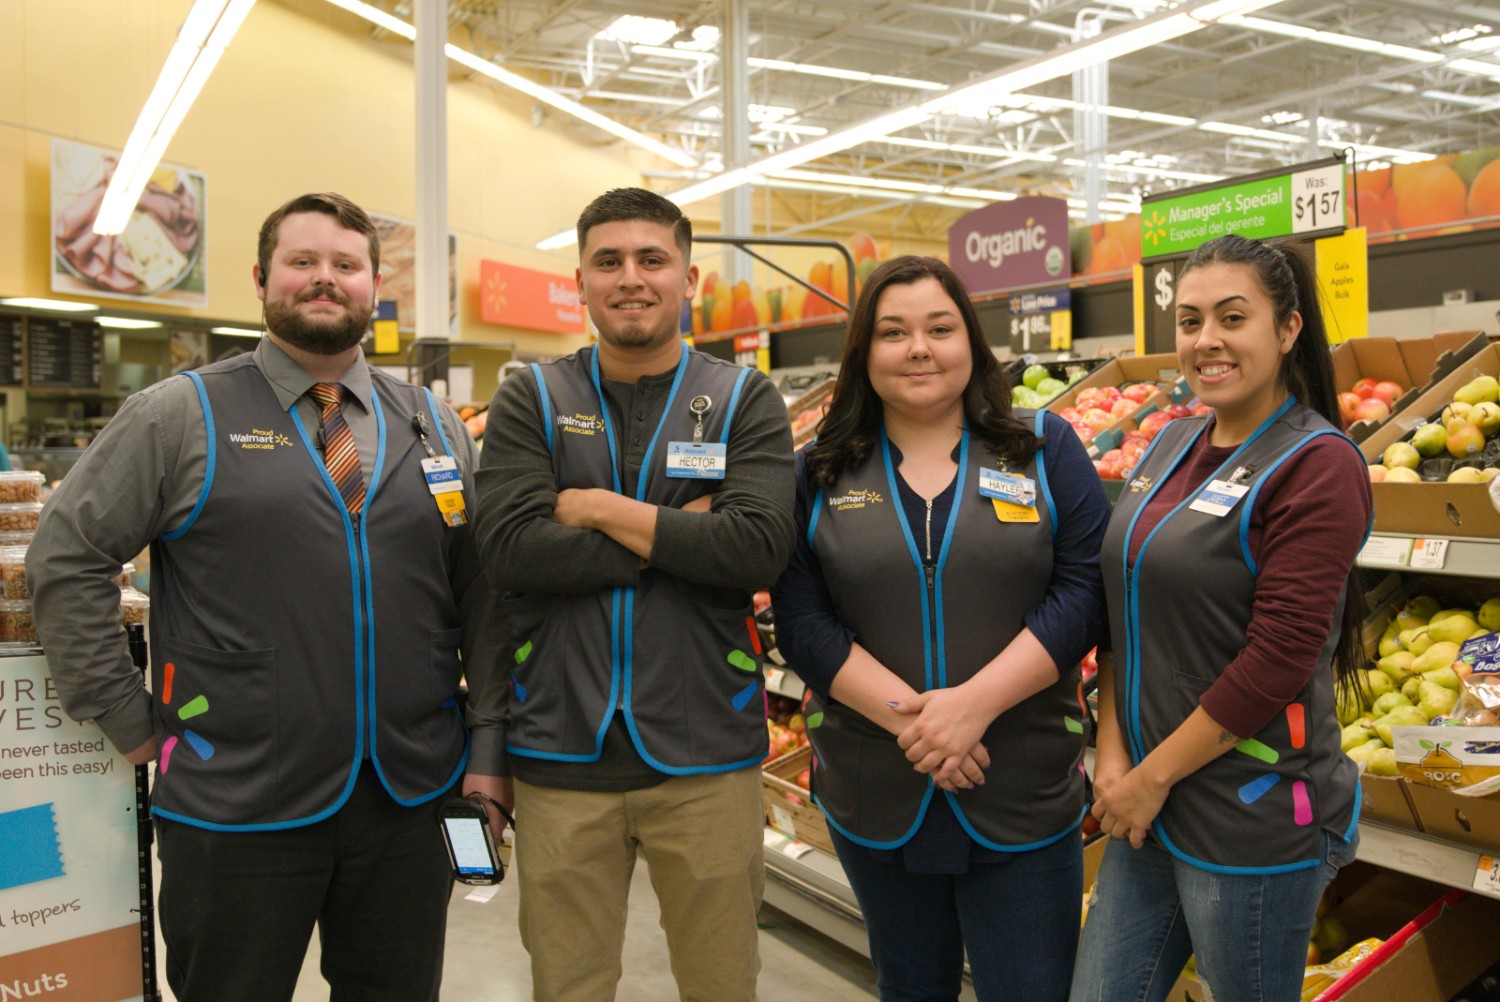 Walmart: Where Careers Thrive and Job Seekers Succeed